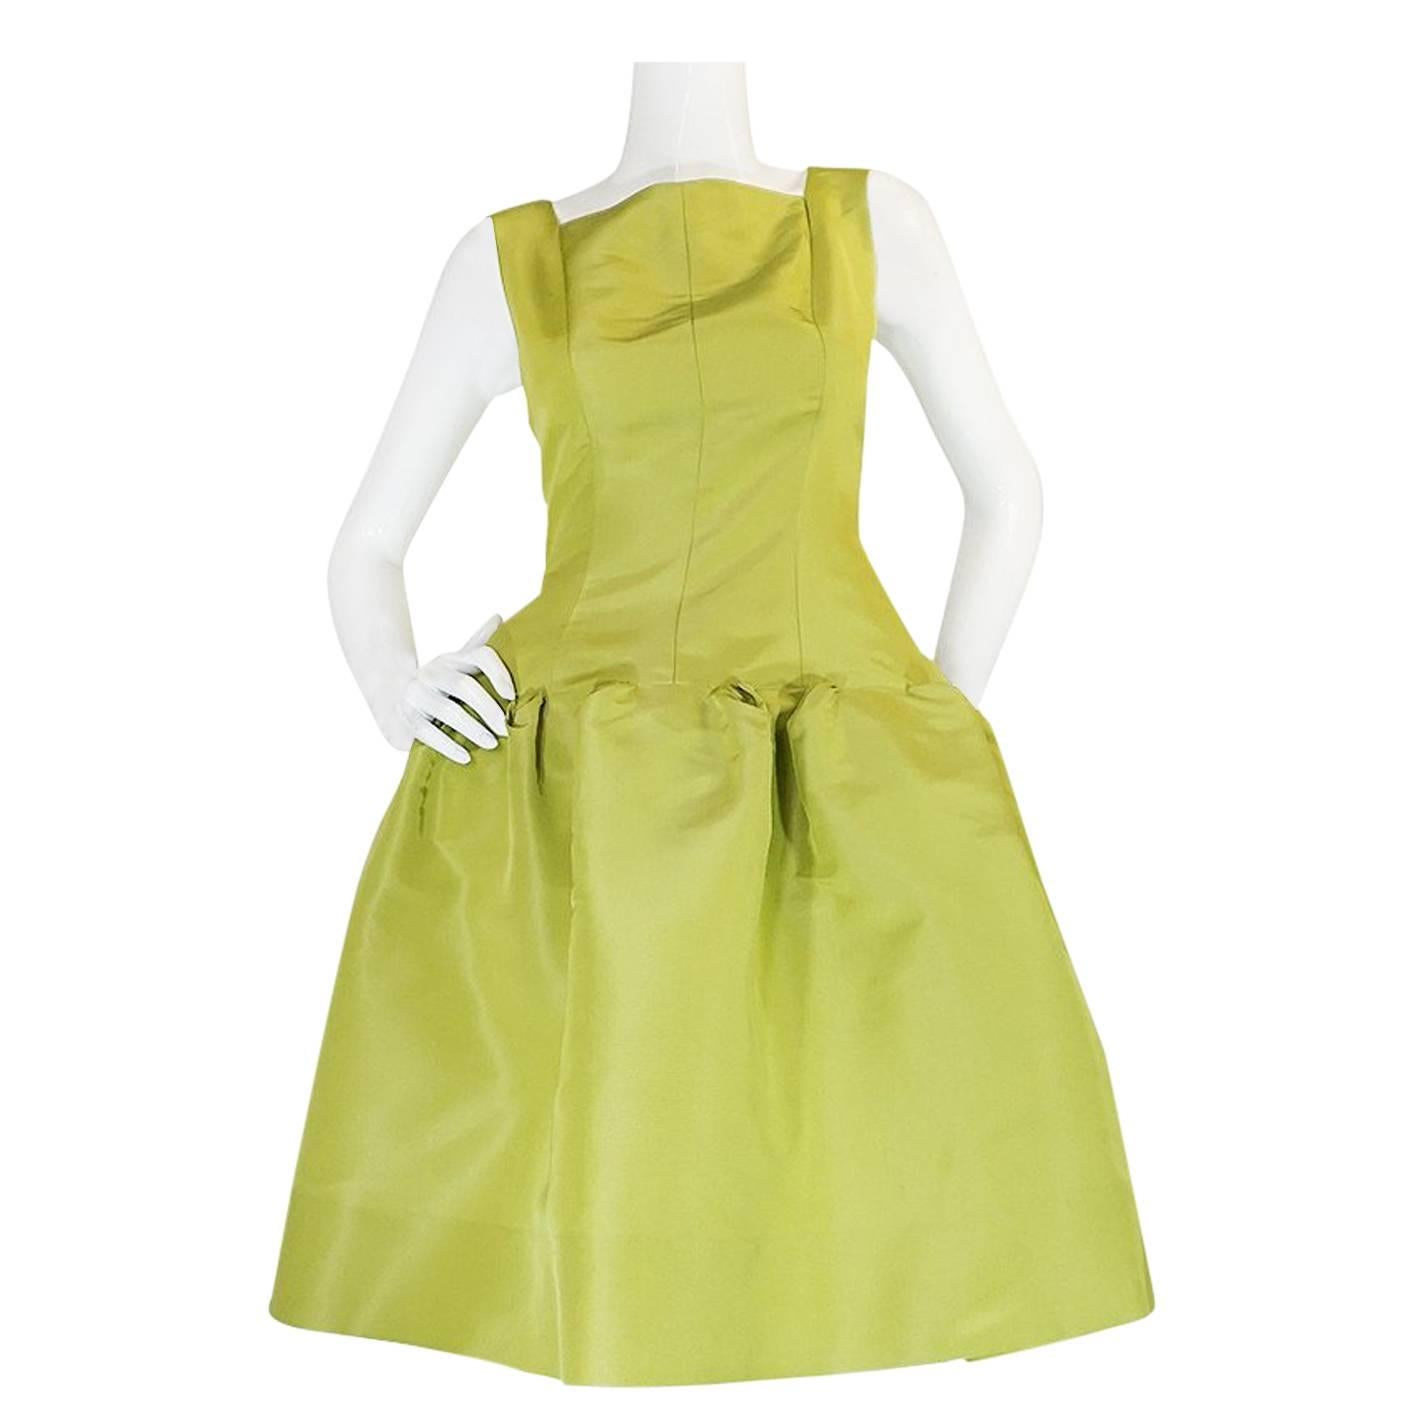 Iconic S/S 2004 Oscar De La Renta Lime Green 'Carrie" Dress